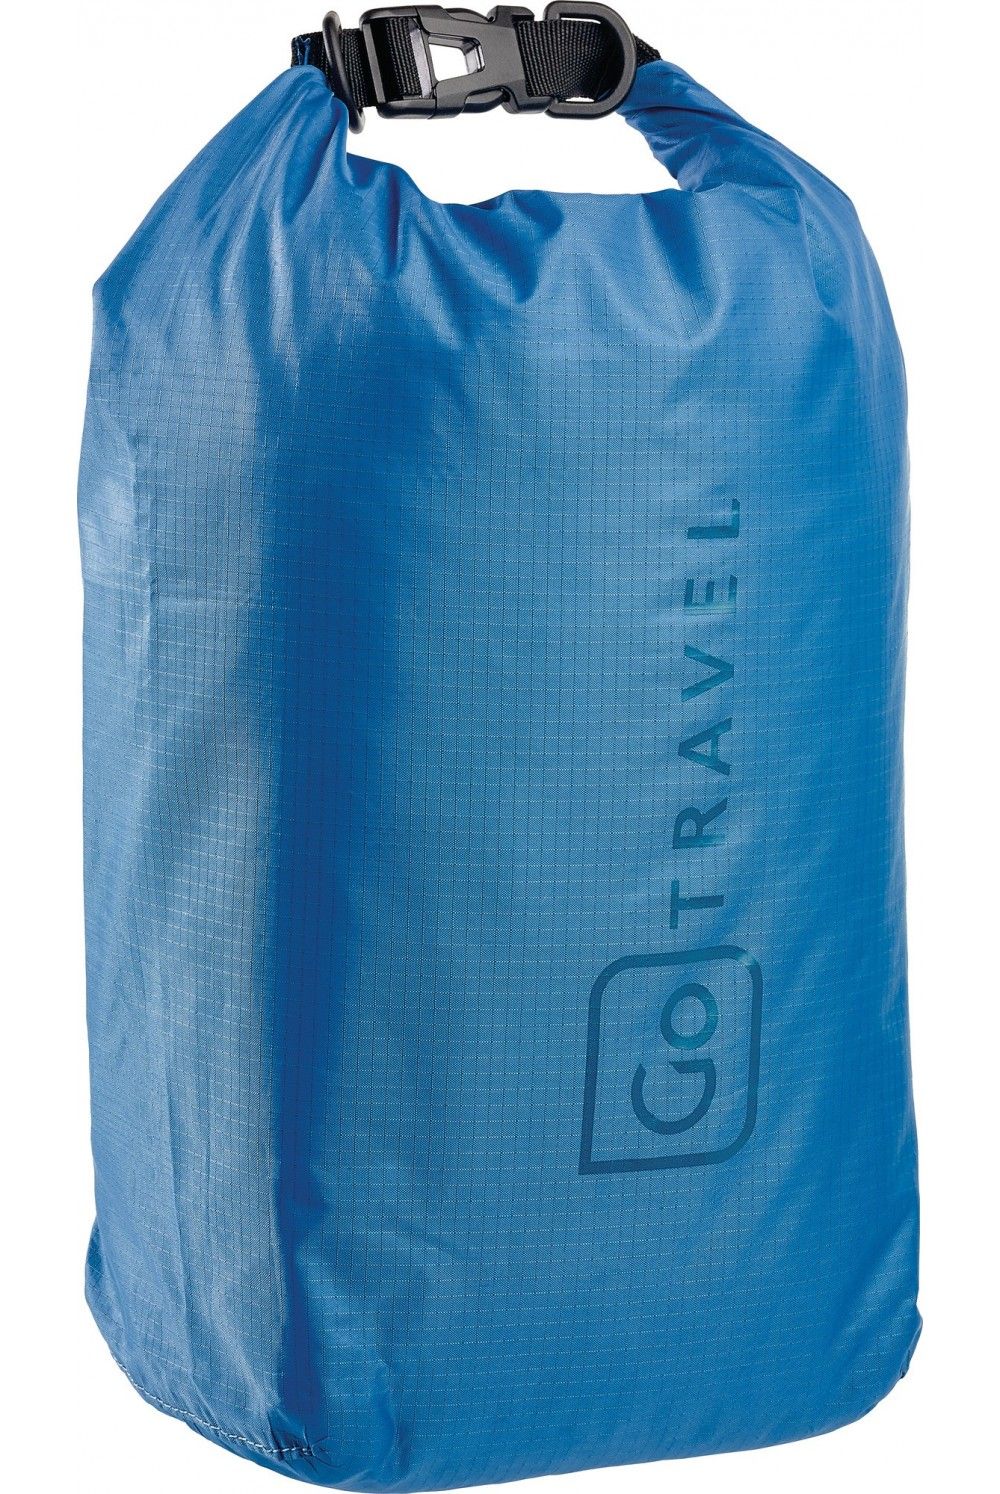 Go Travel wet or dry bag 5 liters